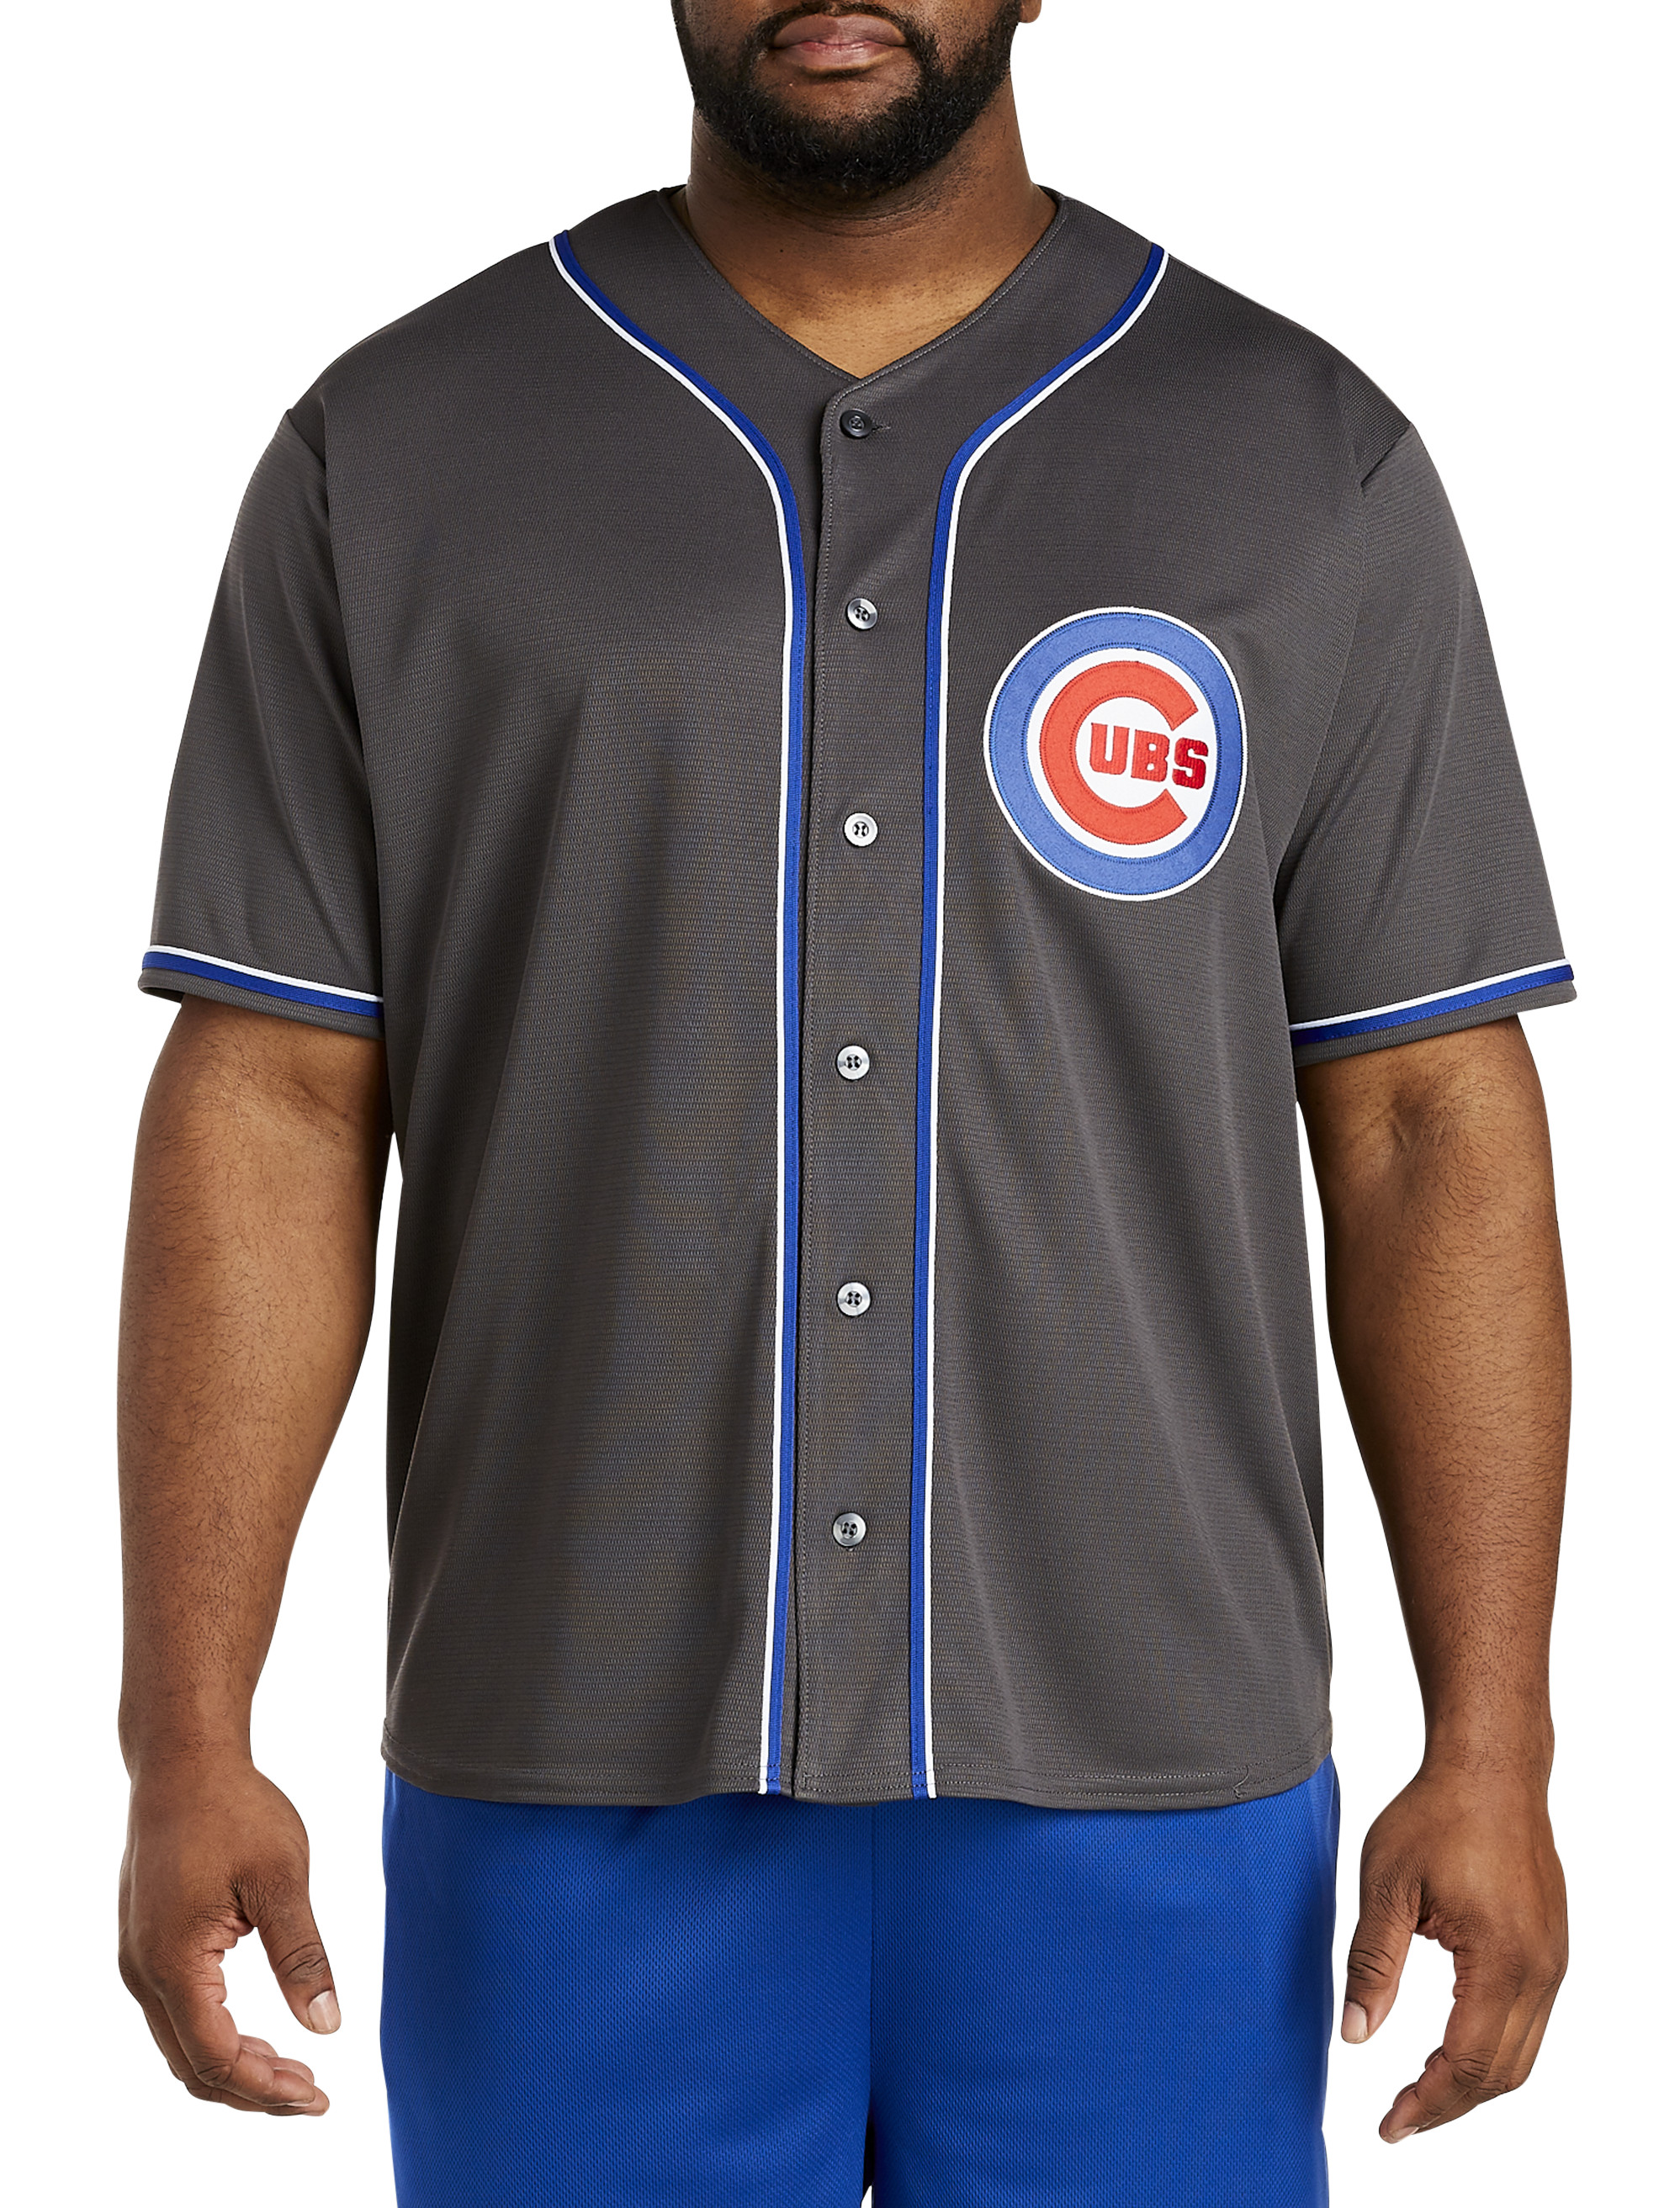 MLB Men's Big & Tall Charcoal Jersey - Blue - Casual Shirts